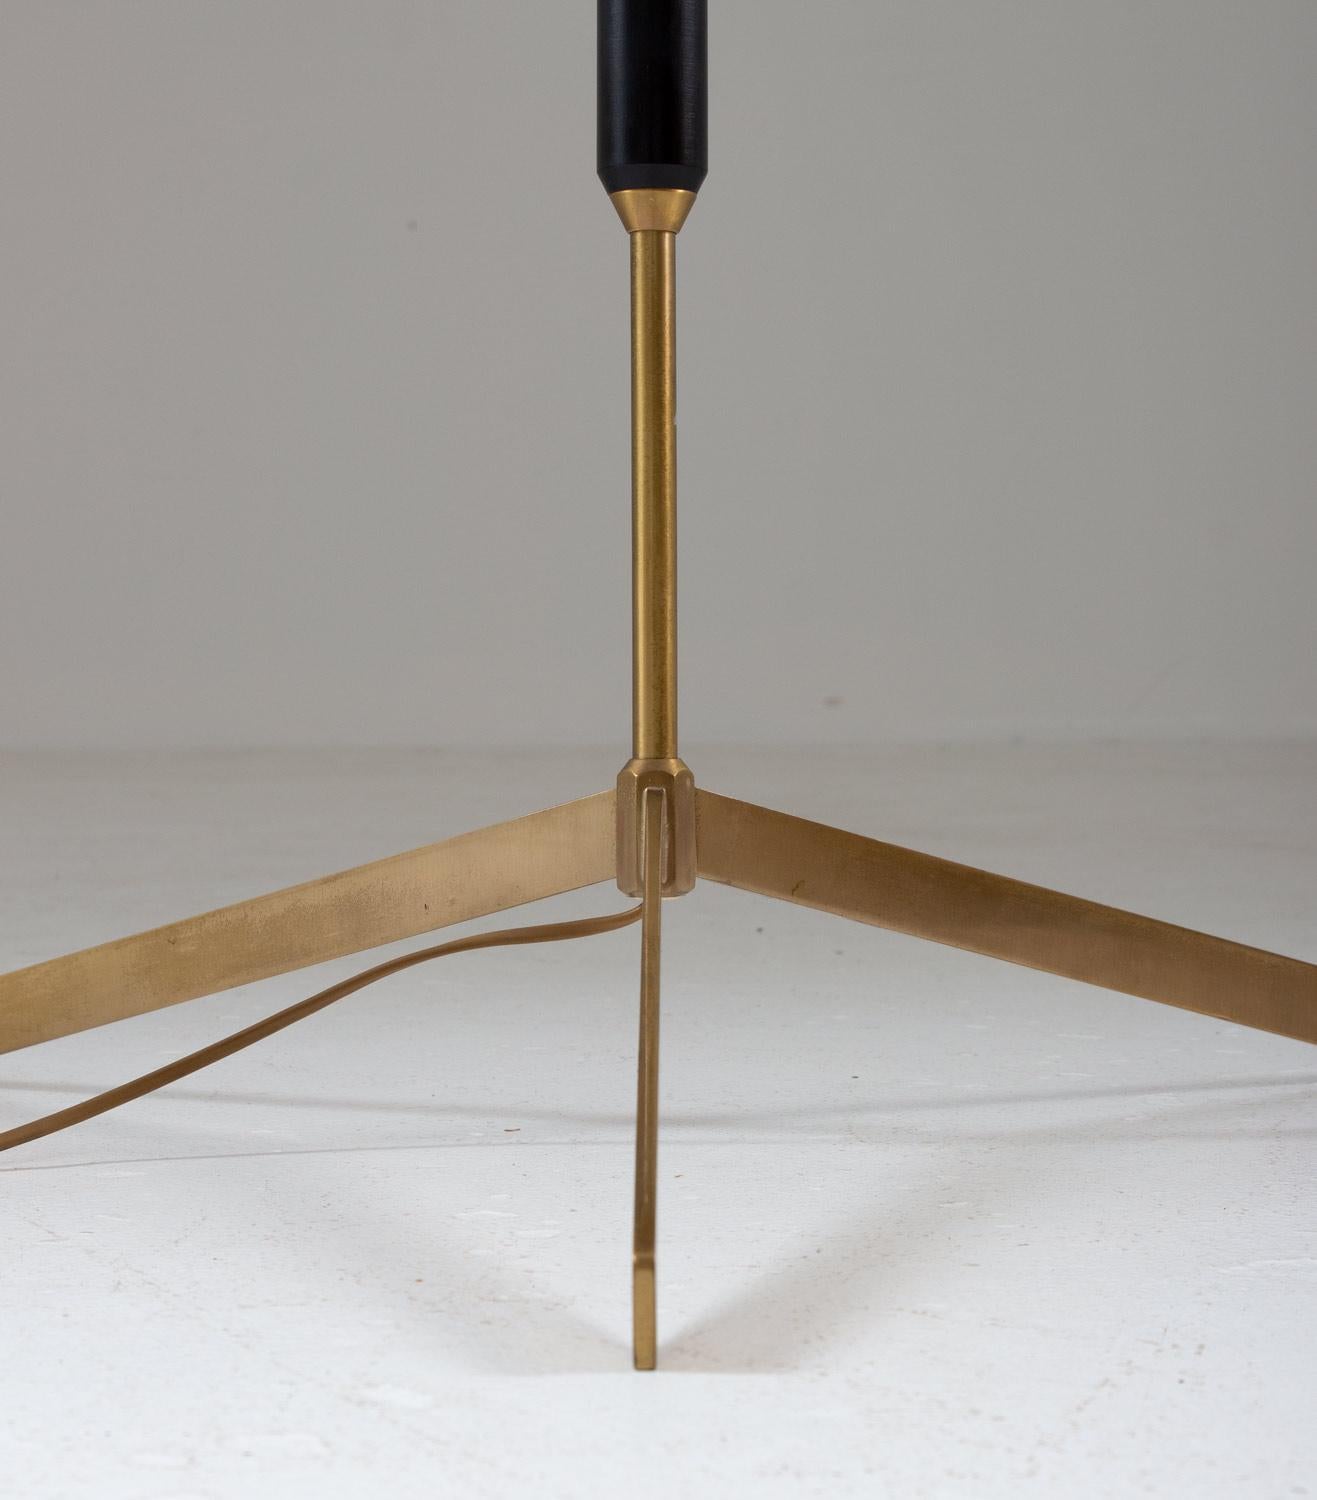 20th Century Scandinavian Midcentury Floor Lamp in Brass and Wood by Bergboms, Sweden